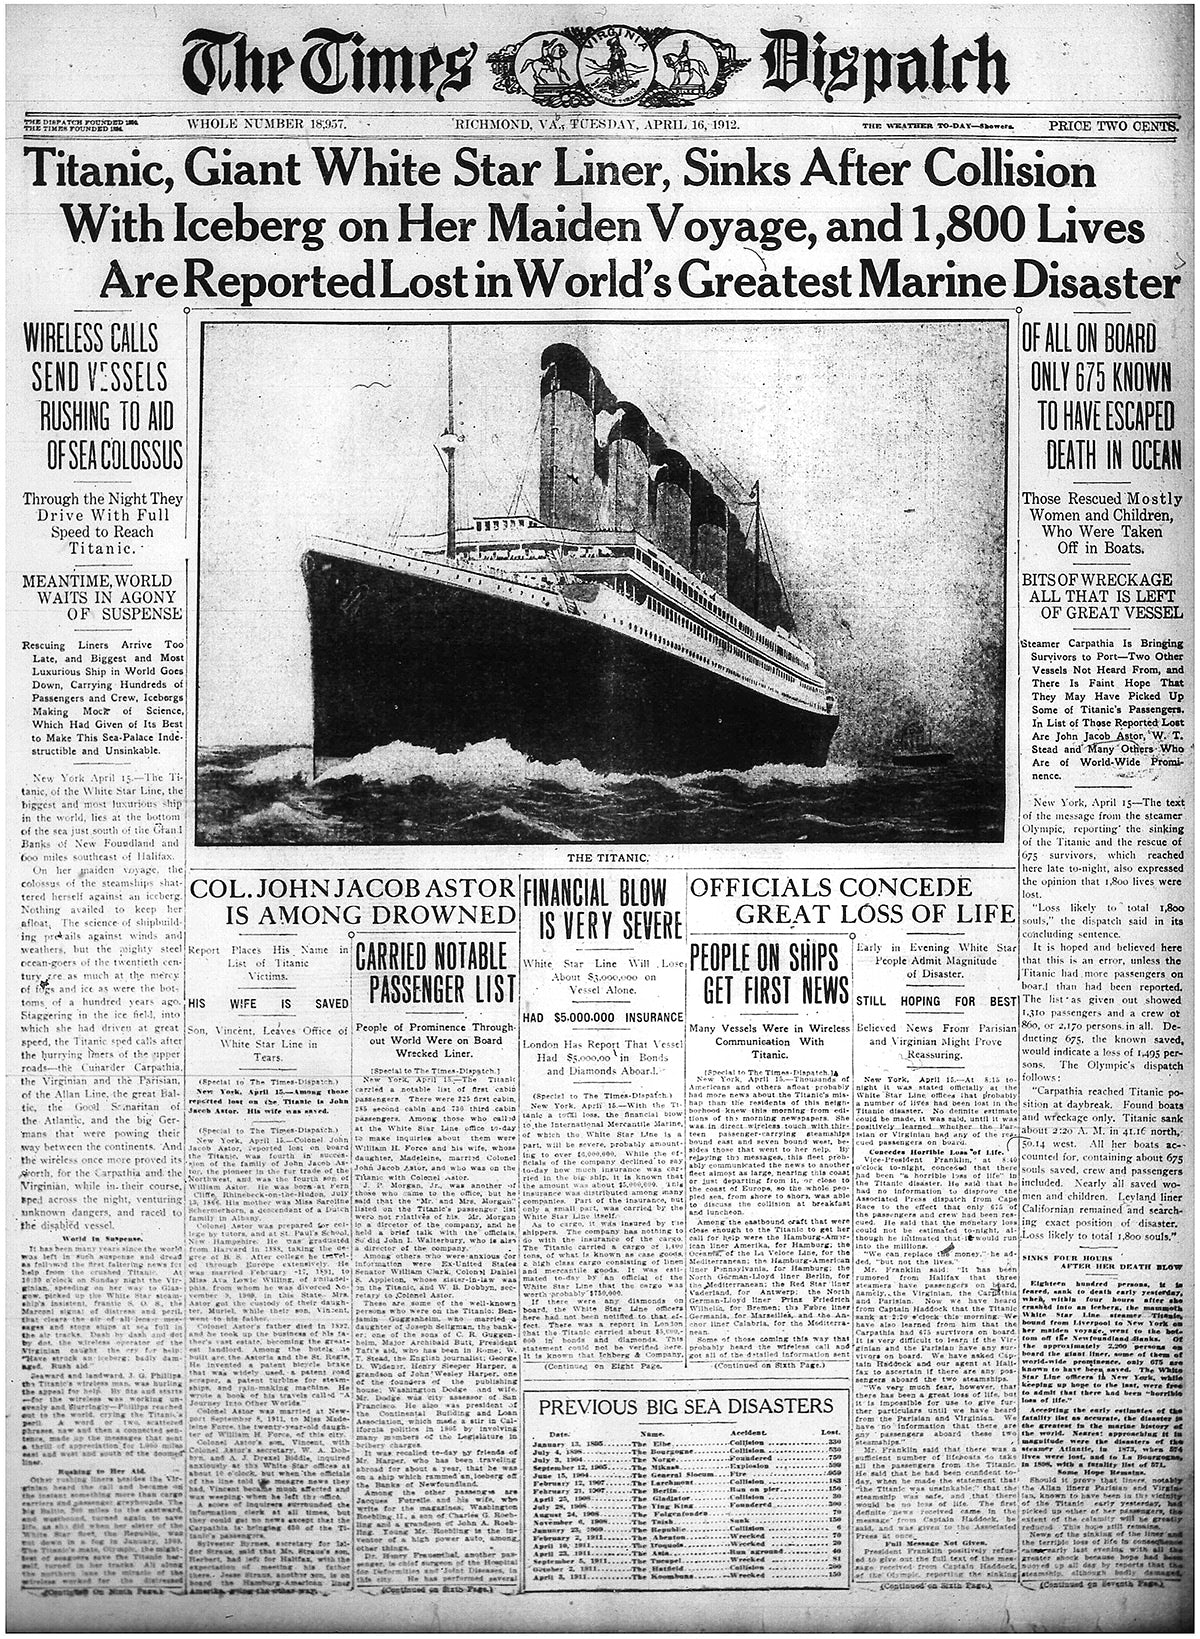 RMS Titanic Vintage Newspaper Poster. Size 30x40 cm